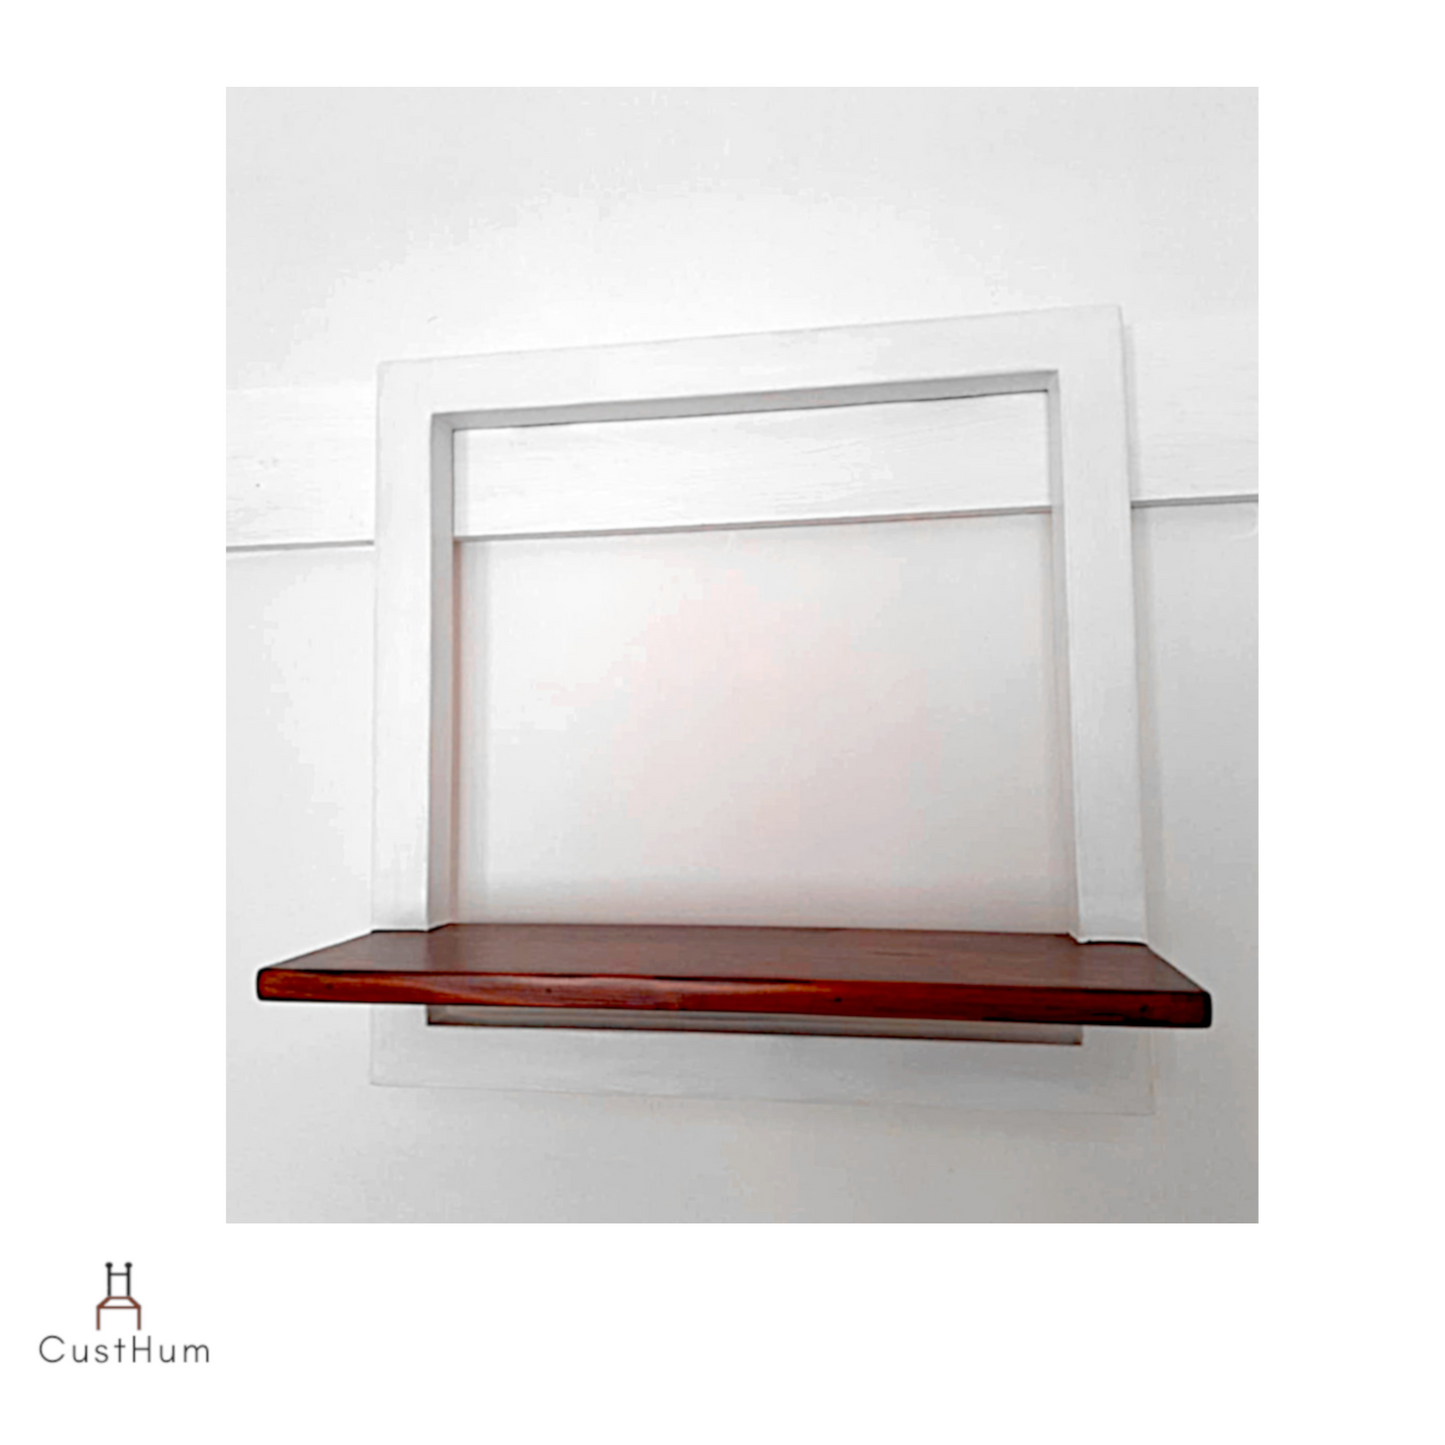 Dorian - Picture Frame Shelf - CustHum